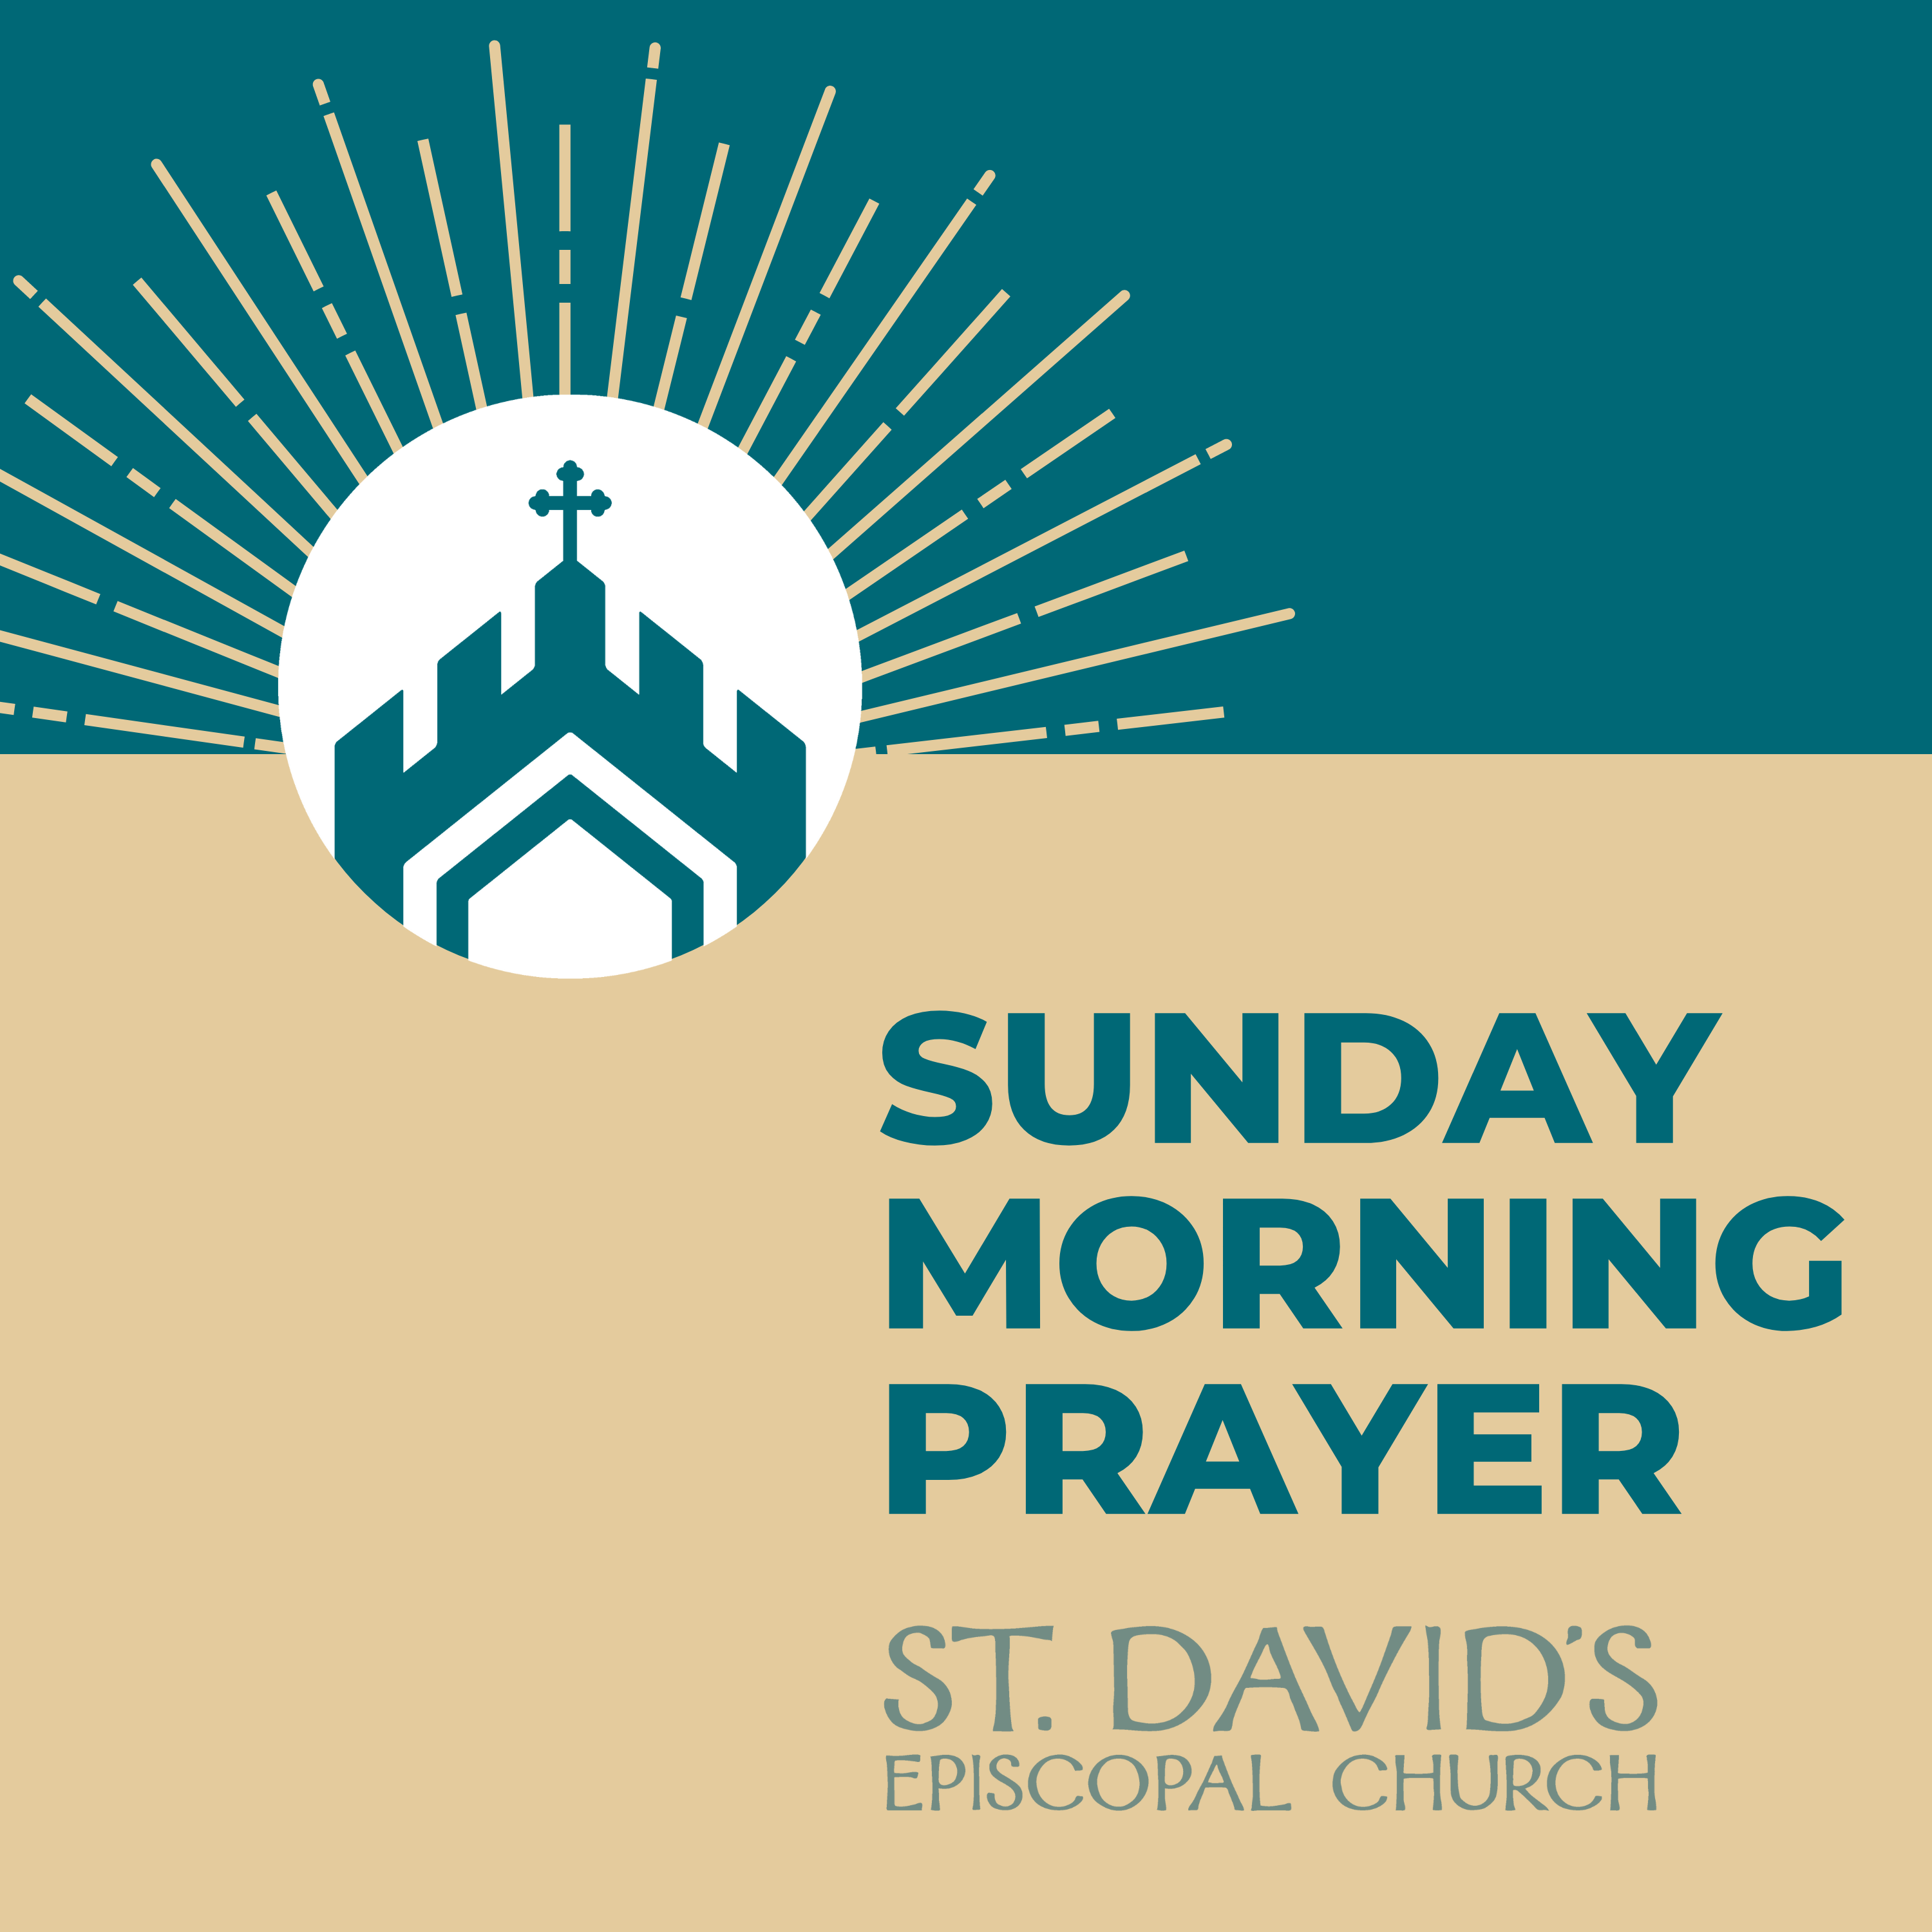 Sunday Morning Prayer: Rite Two, Year 2, 16th Sunday after Pentecost